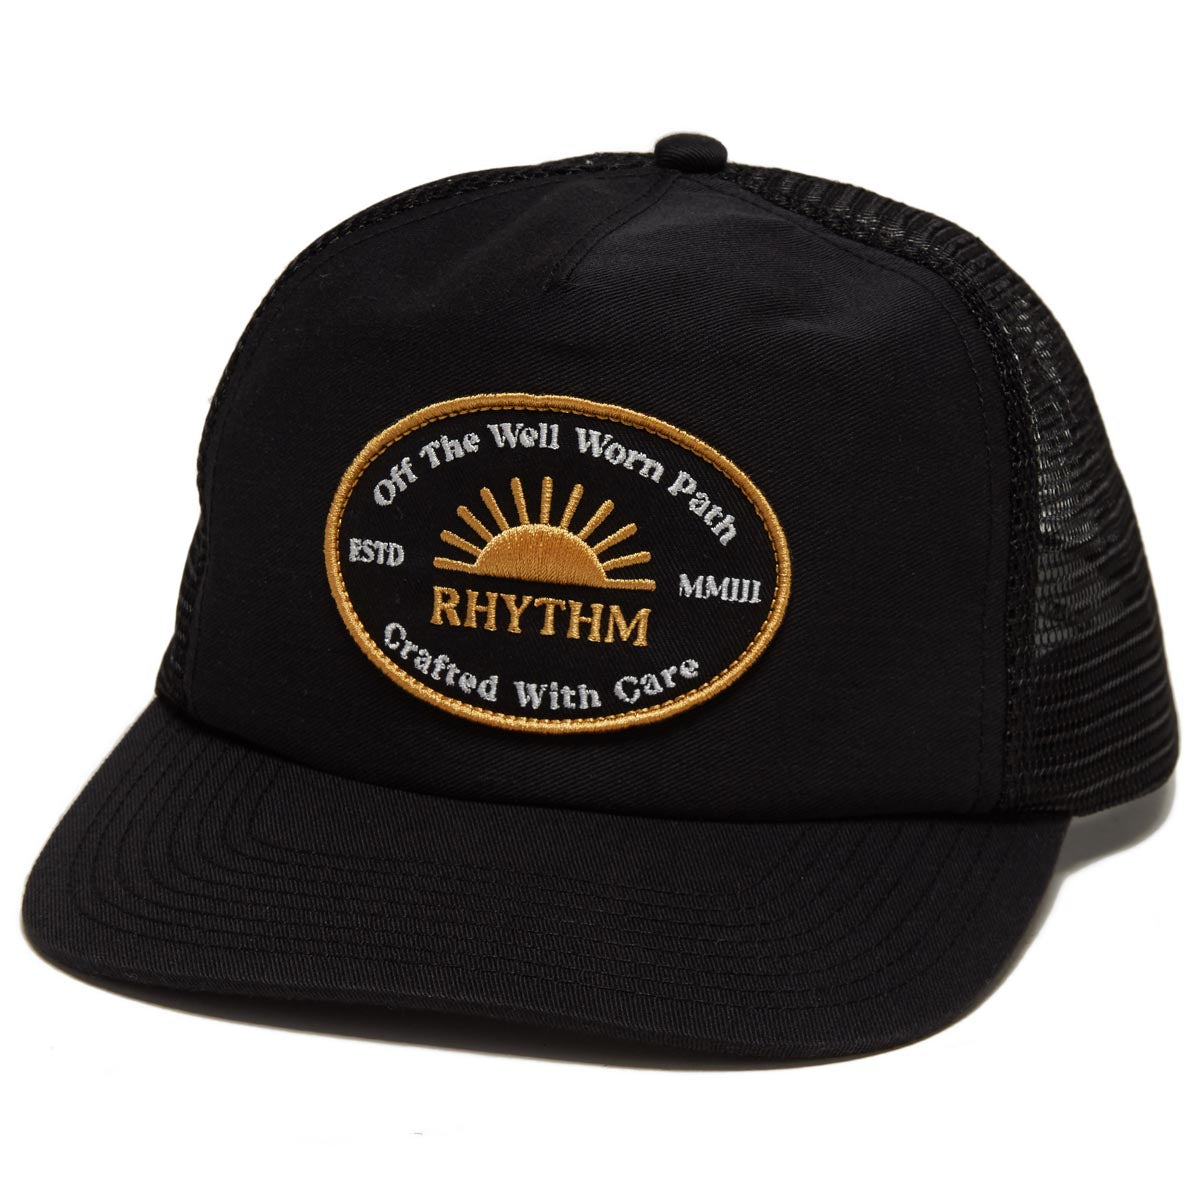 Rhythm Worn Path Trucker Hat - Black image 1